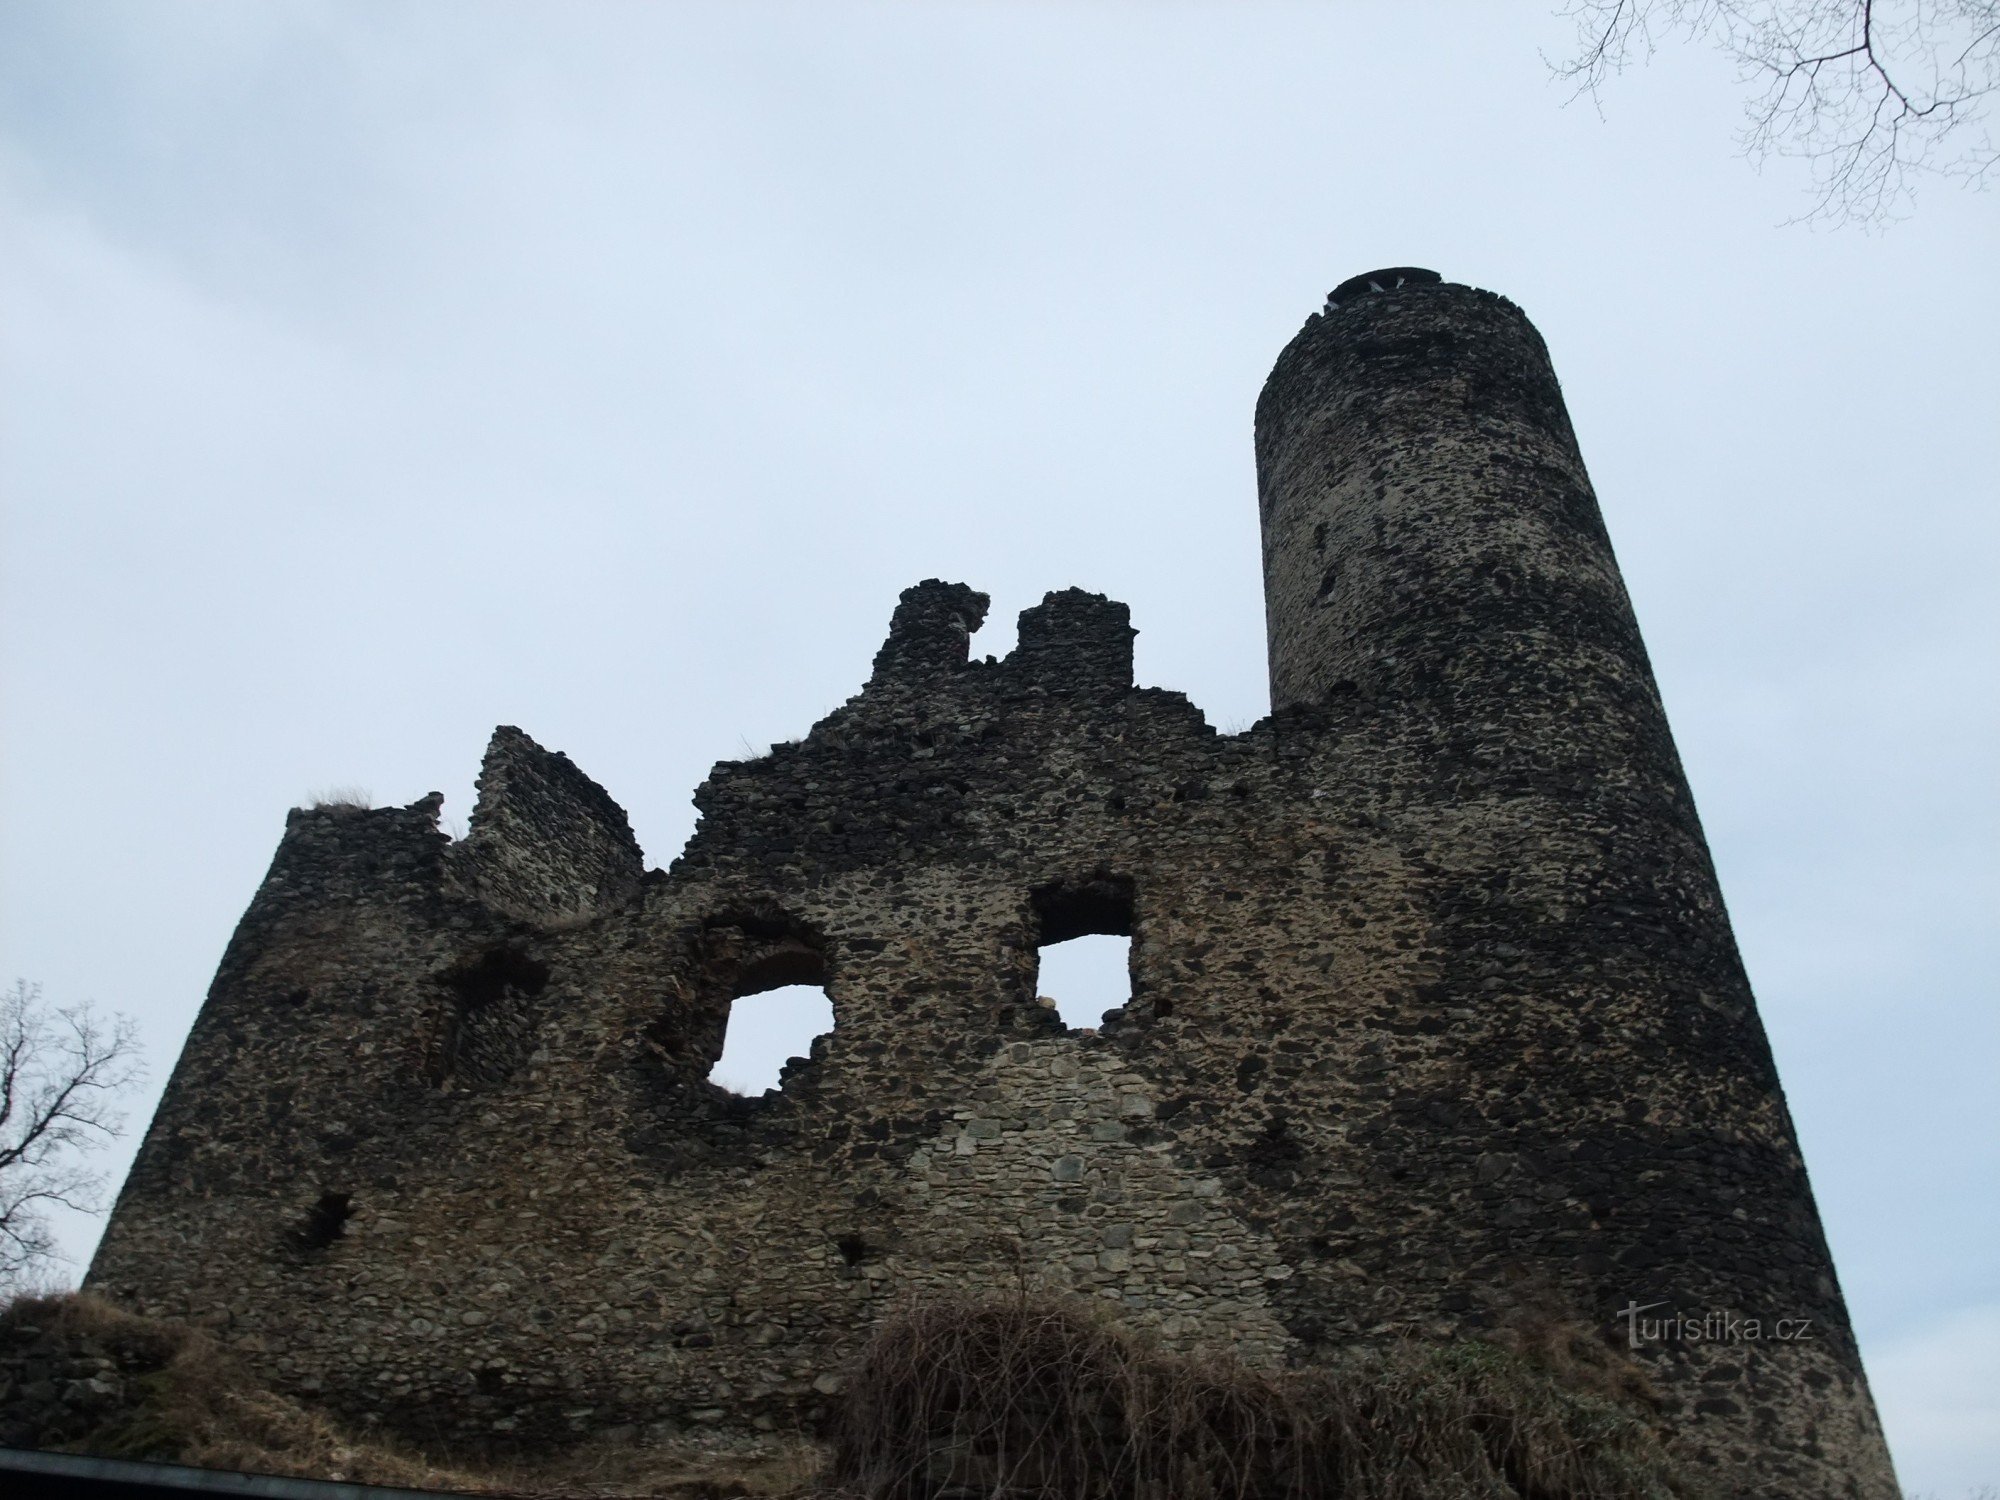 The preserved Kostomlaty castle under Milešovka